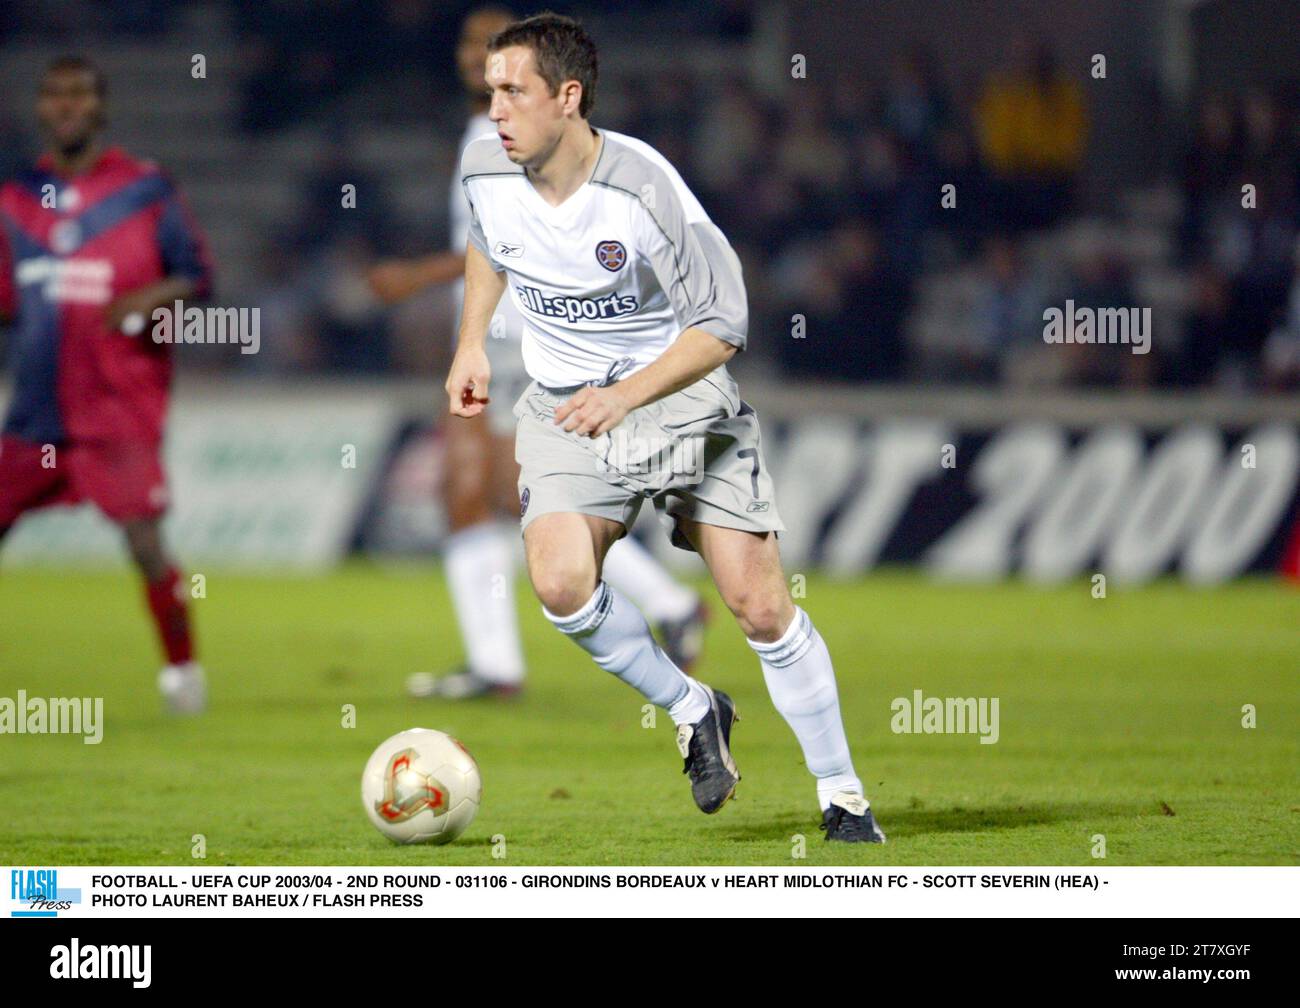 FOOTBALL - UEFA CUP 2003/04 - 2ND ROUND - 031106 - GIRONDINS BORDEAUX v HEART MIDLOTHIAN FC - SCOTT SEVERIN (HEA) - PHOTO LAURENT BAHEUX / FLASH PRESS Stock Photo